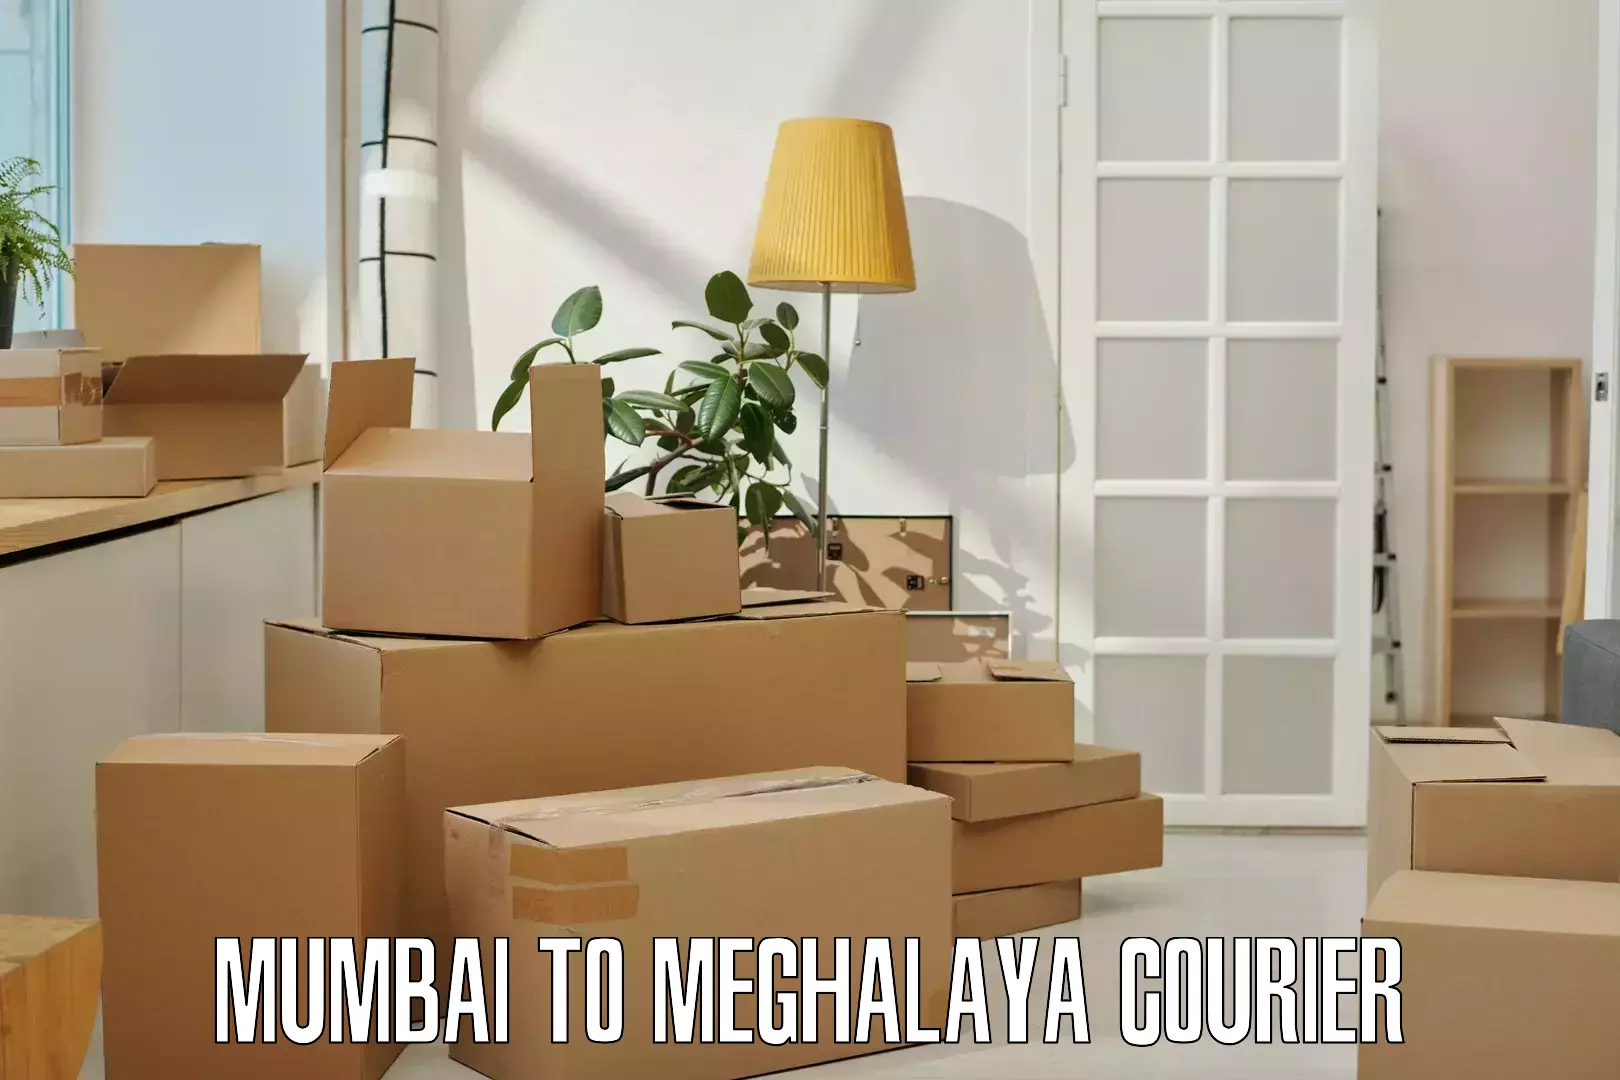 State-of-the-art courier technology Mumbai to Meghalaya